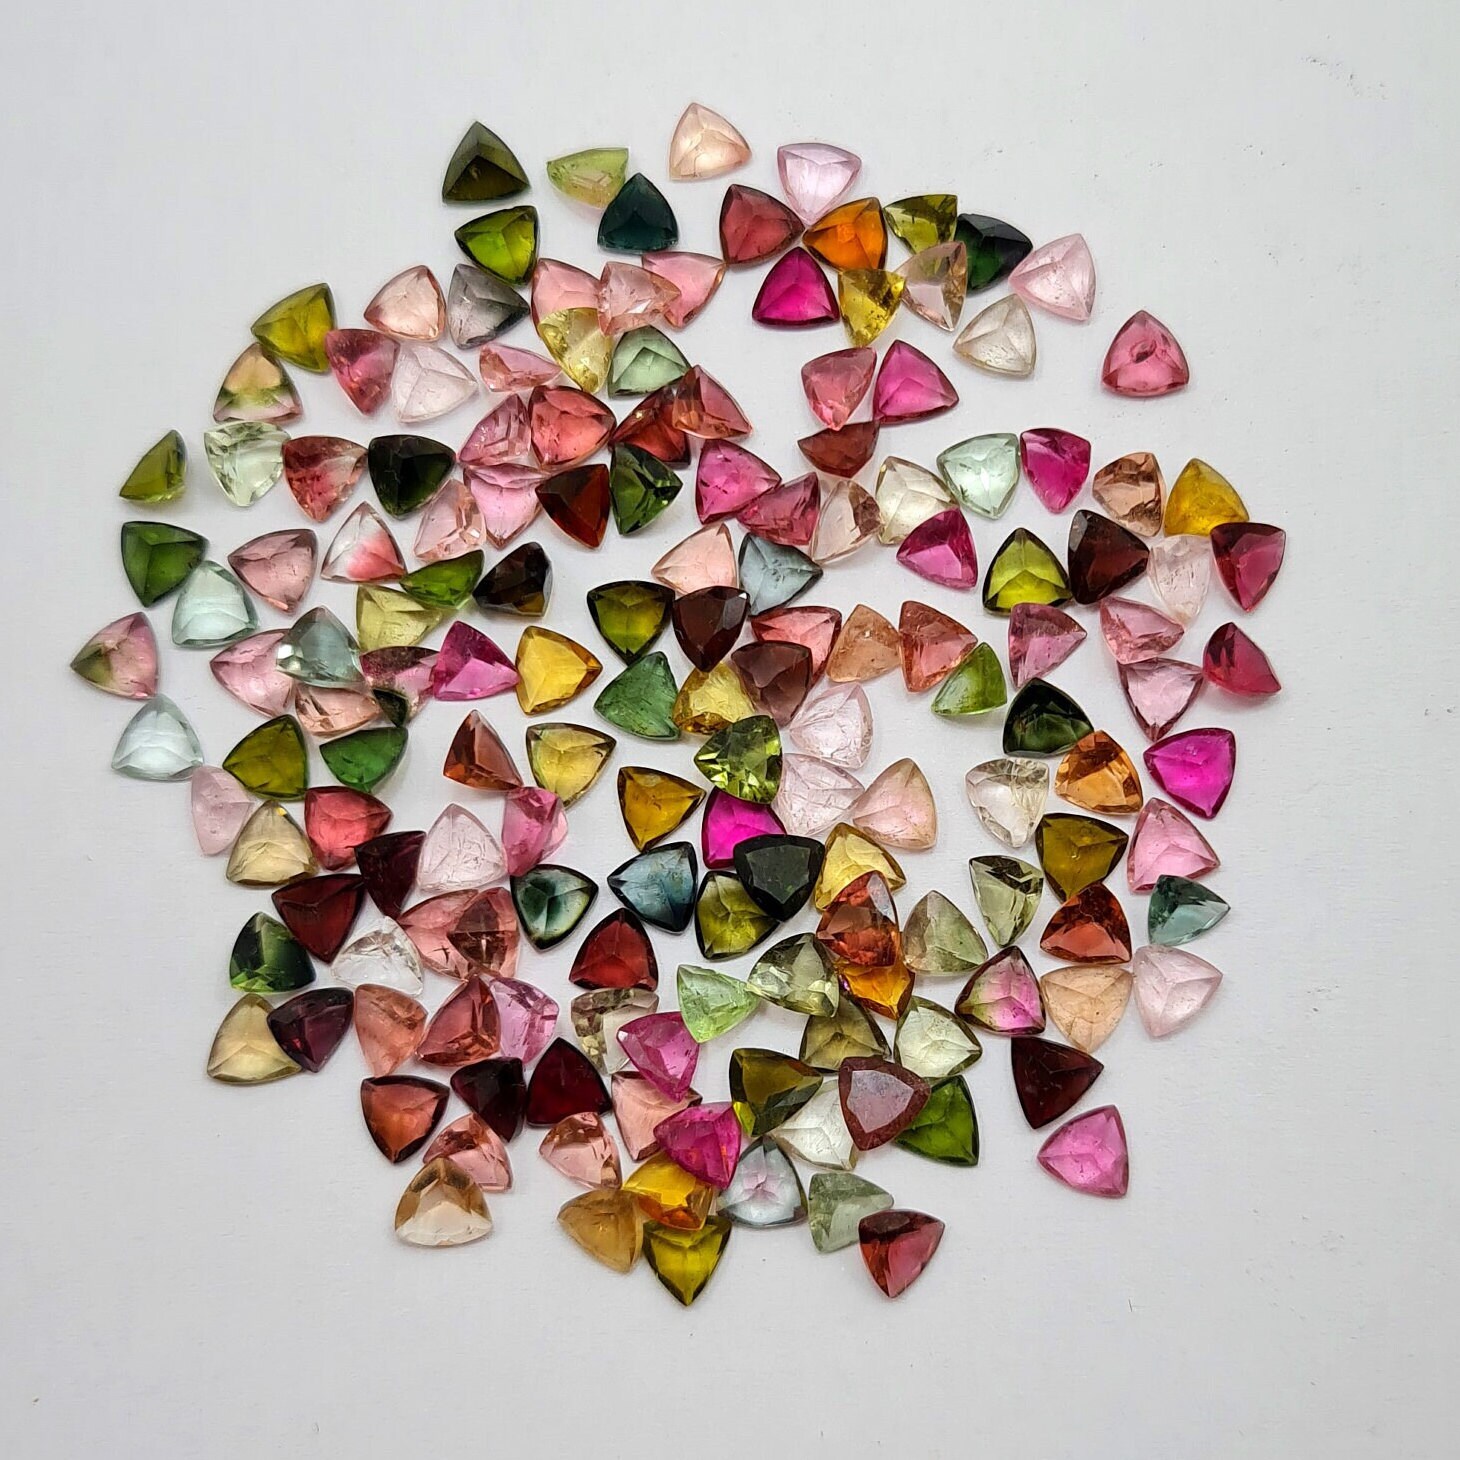 Mixed Loose Gemstones, Multi color Stones~ Faceted Mix Gemstones